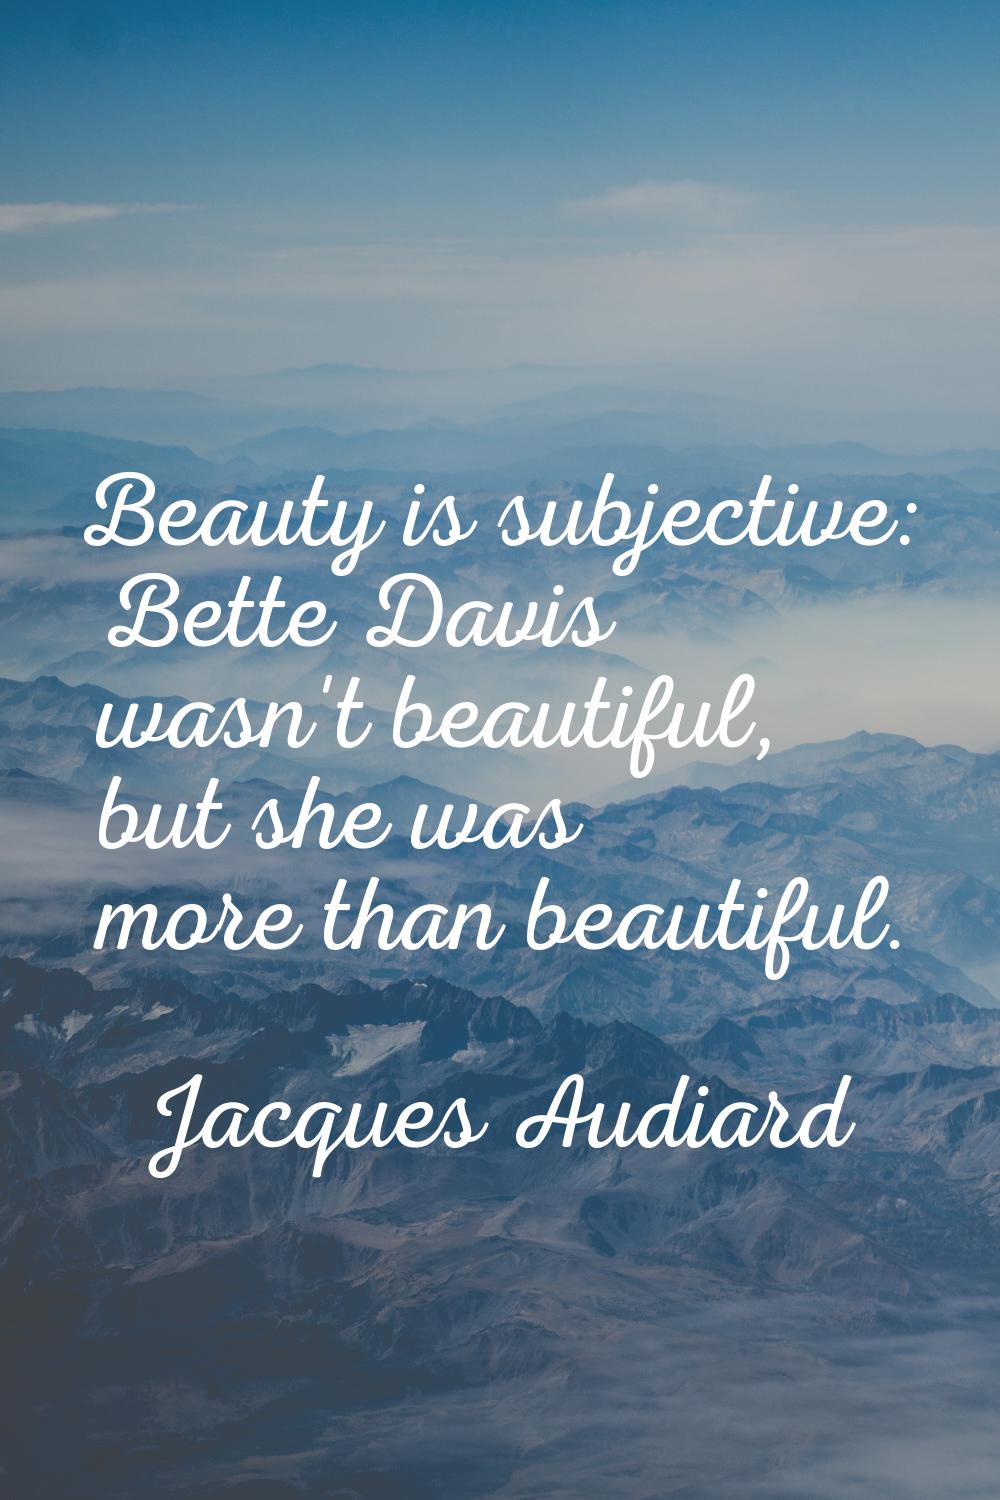 Beauty is subjective: Bette Davis wasn't beautiful, but she was more than beautiful.